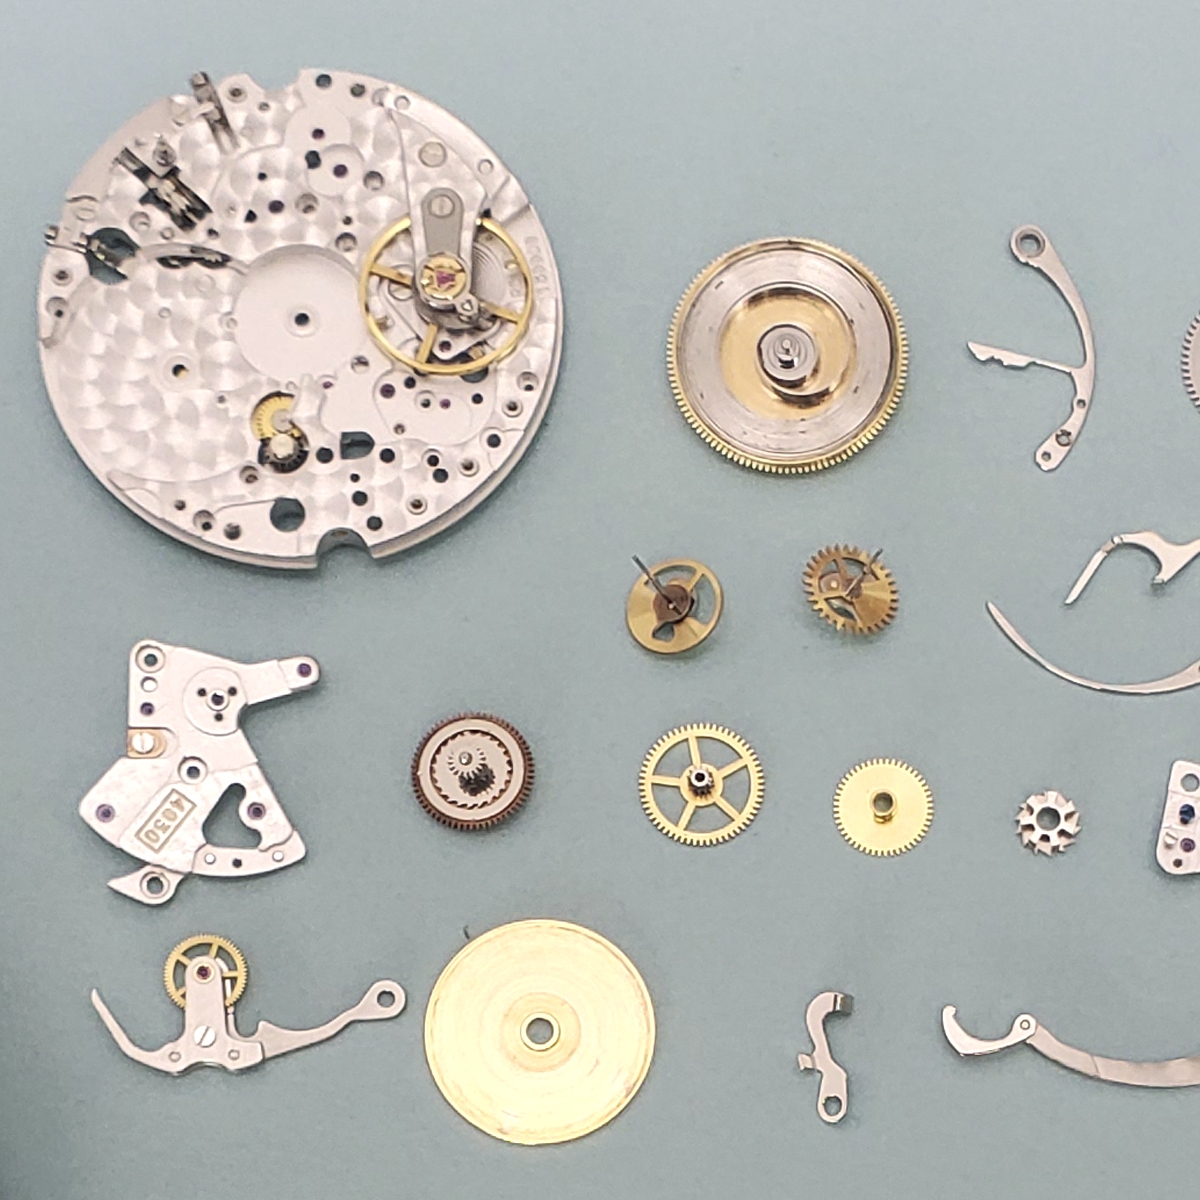 Rolex Daytona Two Tone Cosmograph watch repair